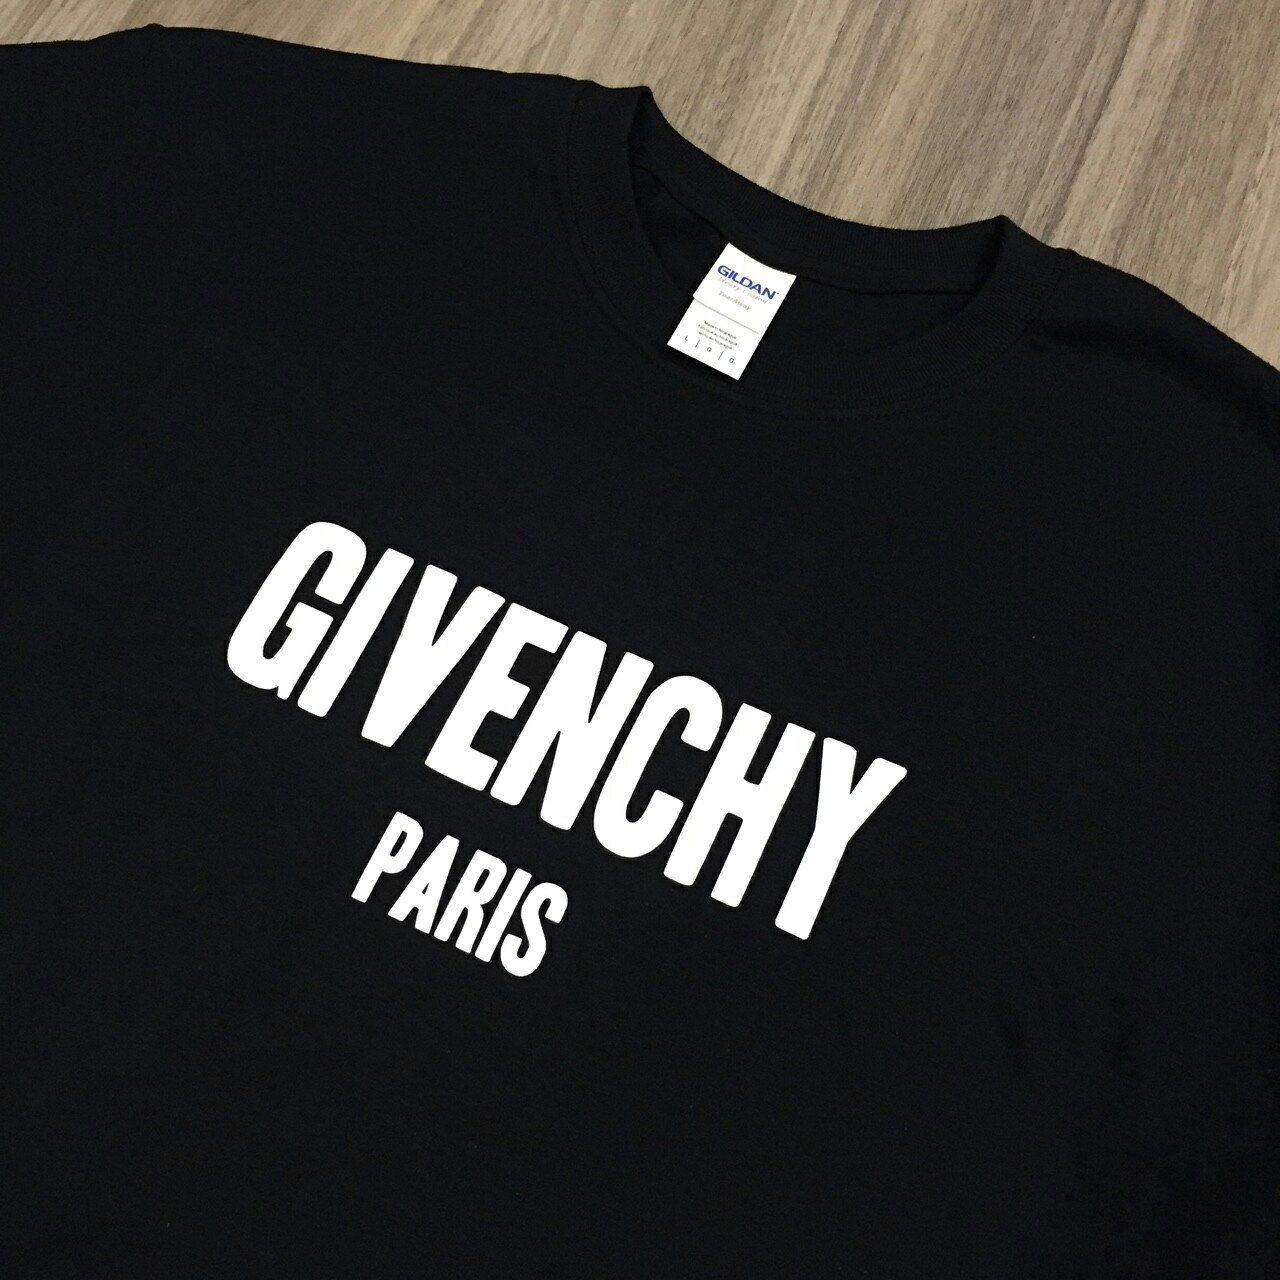 Givenchy Paris Logo - Givenchy Paris Unisex T-Shirt Balenciaga Gucci Louis Chanel Dior ...